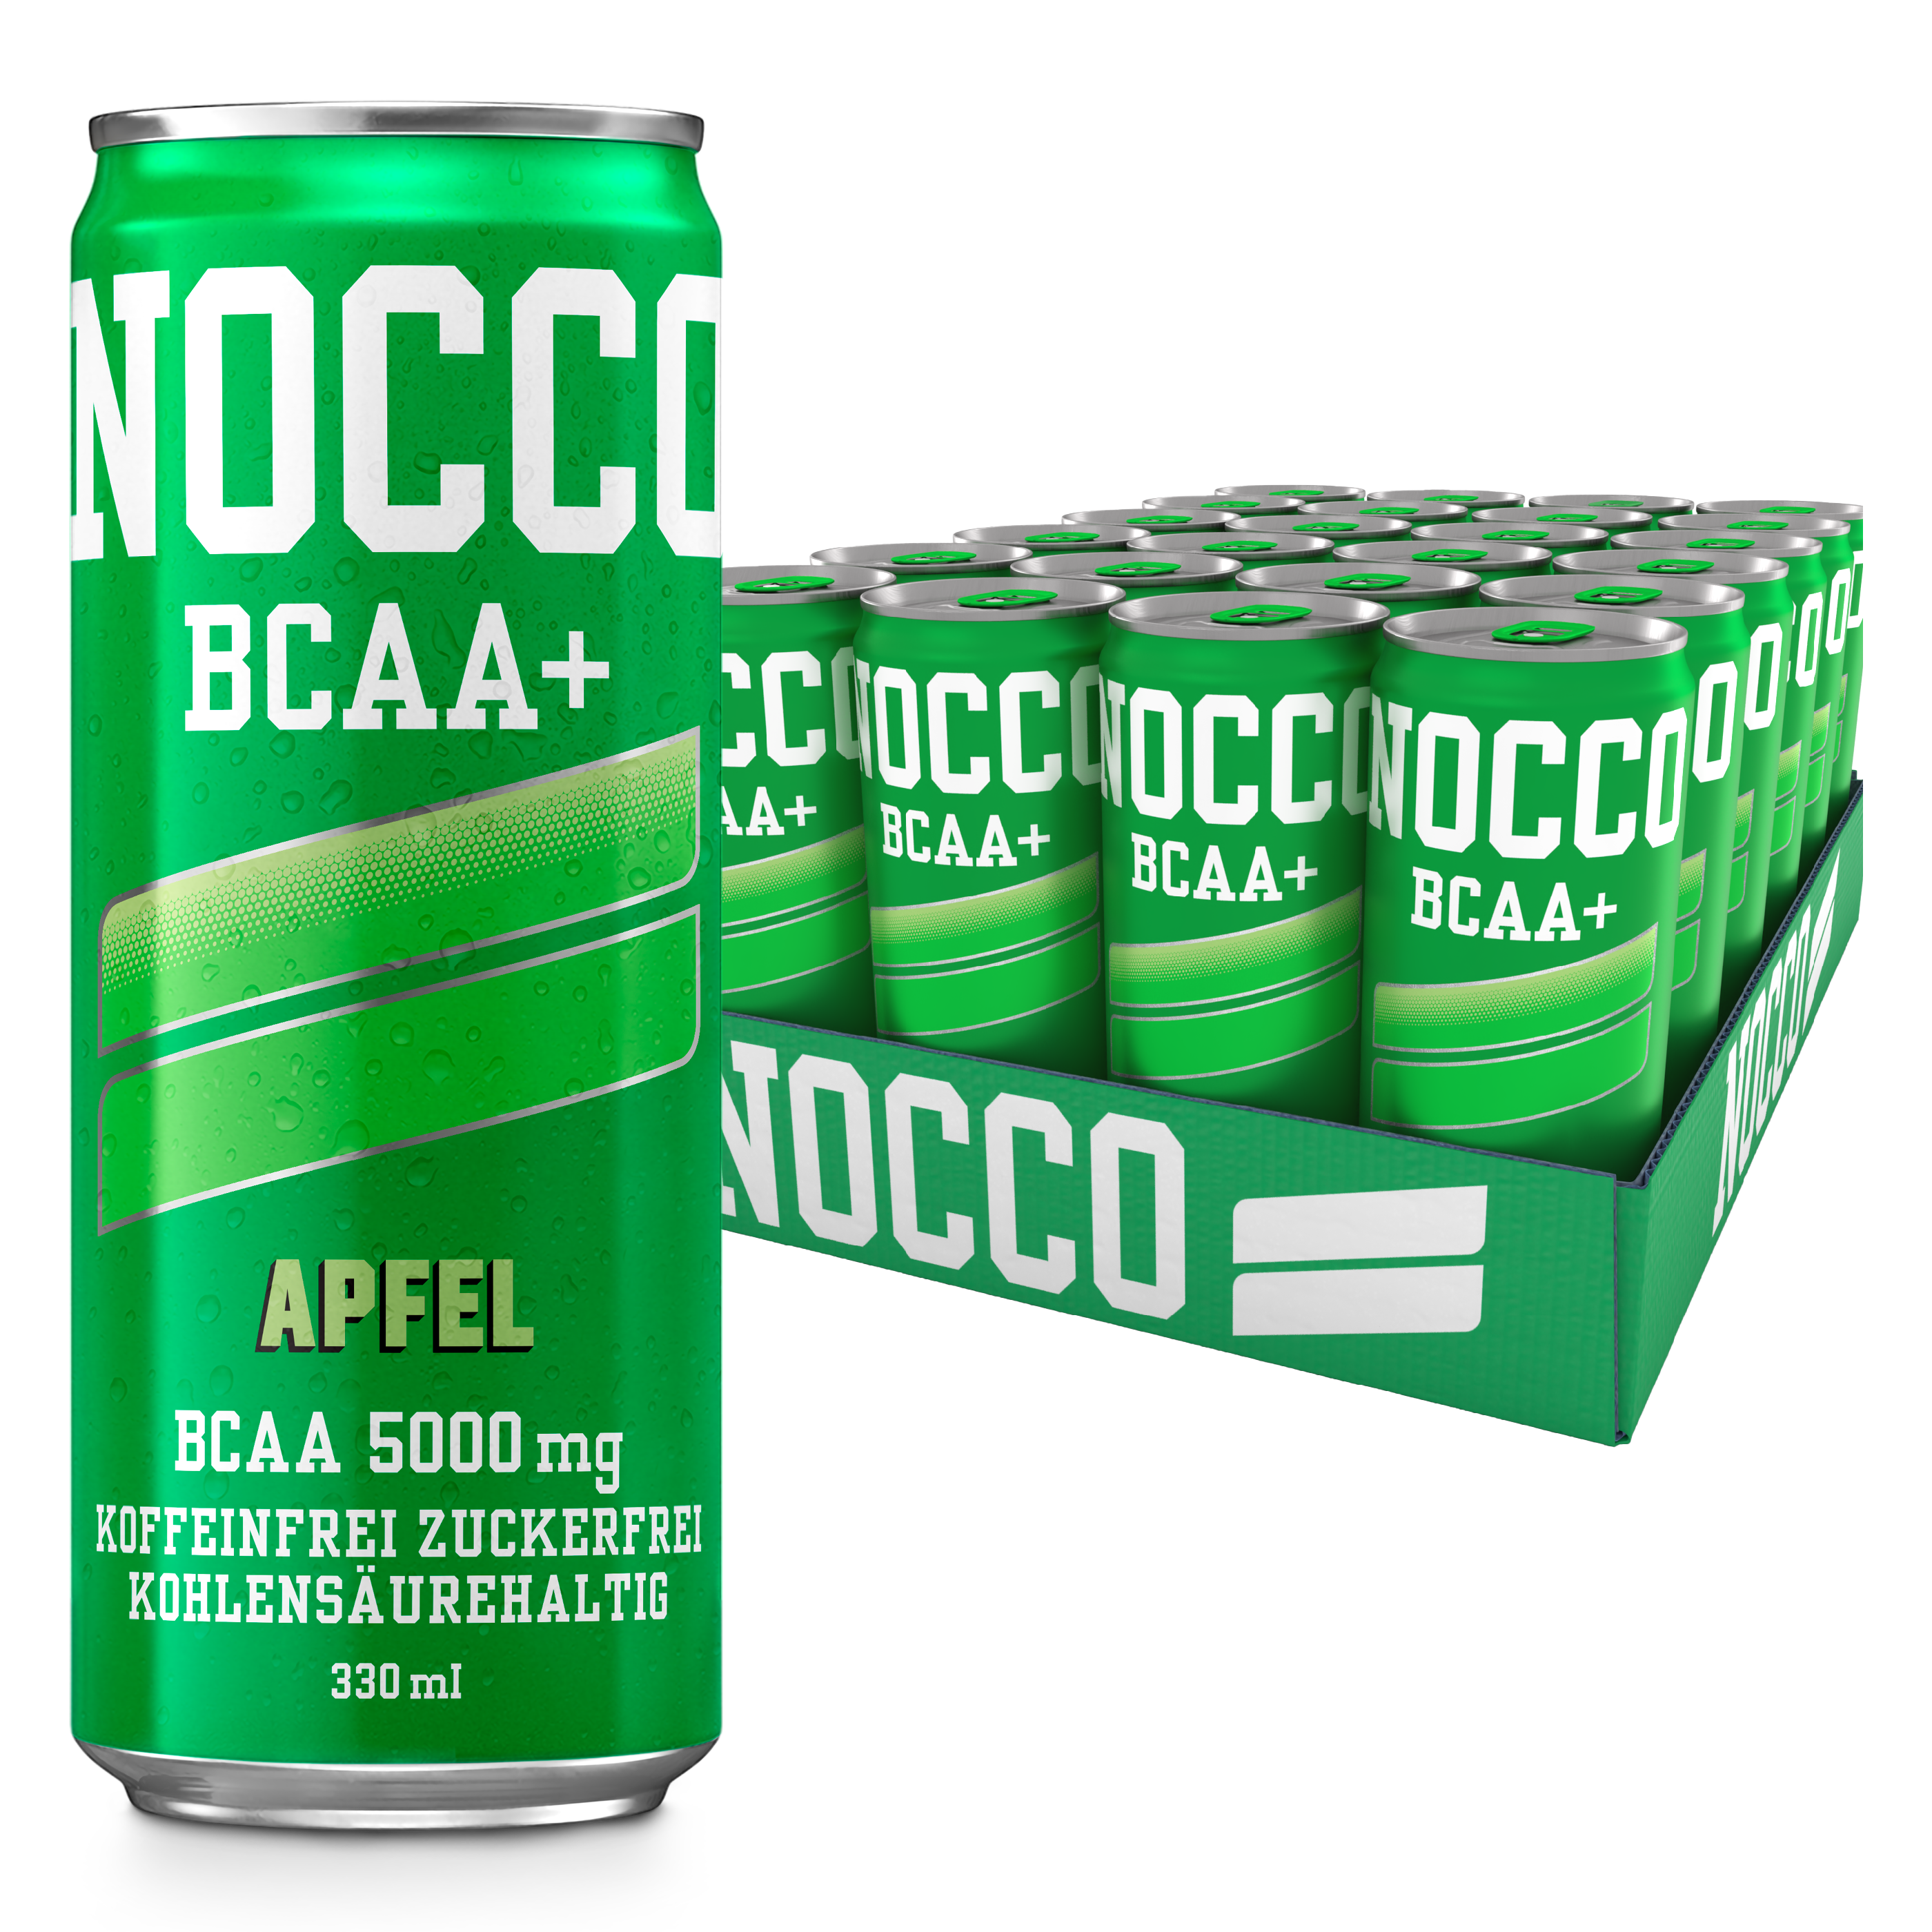 Nocco Apfel 24-pack